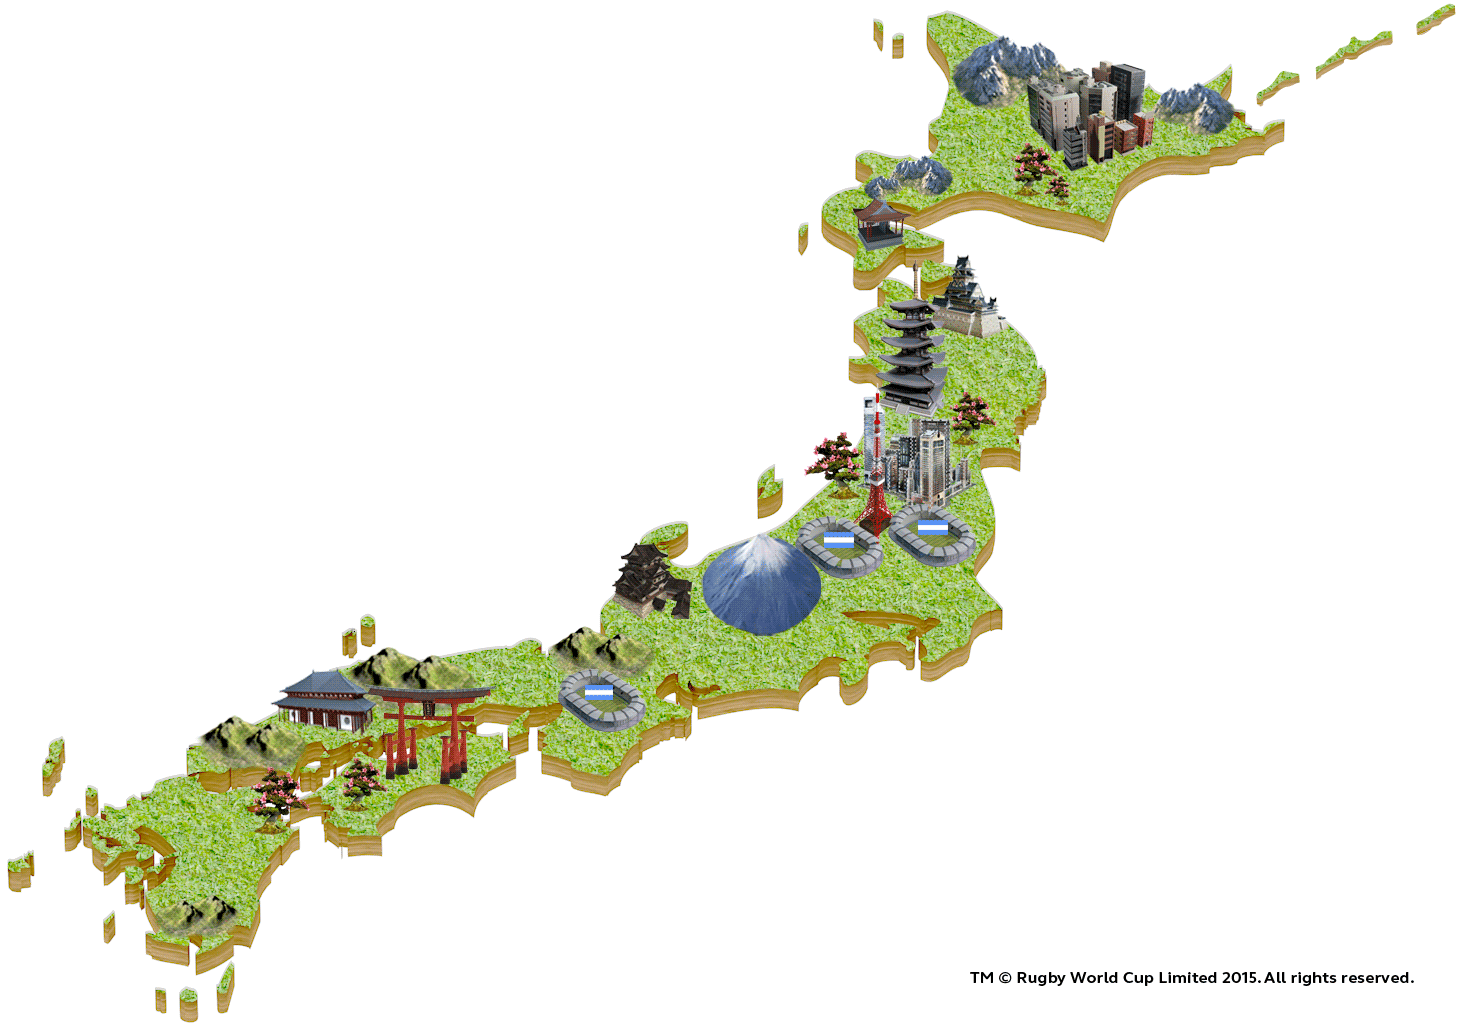 Mapa Japón